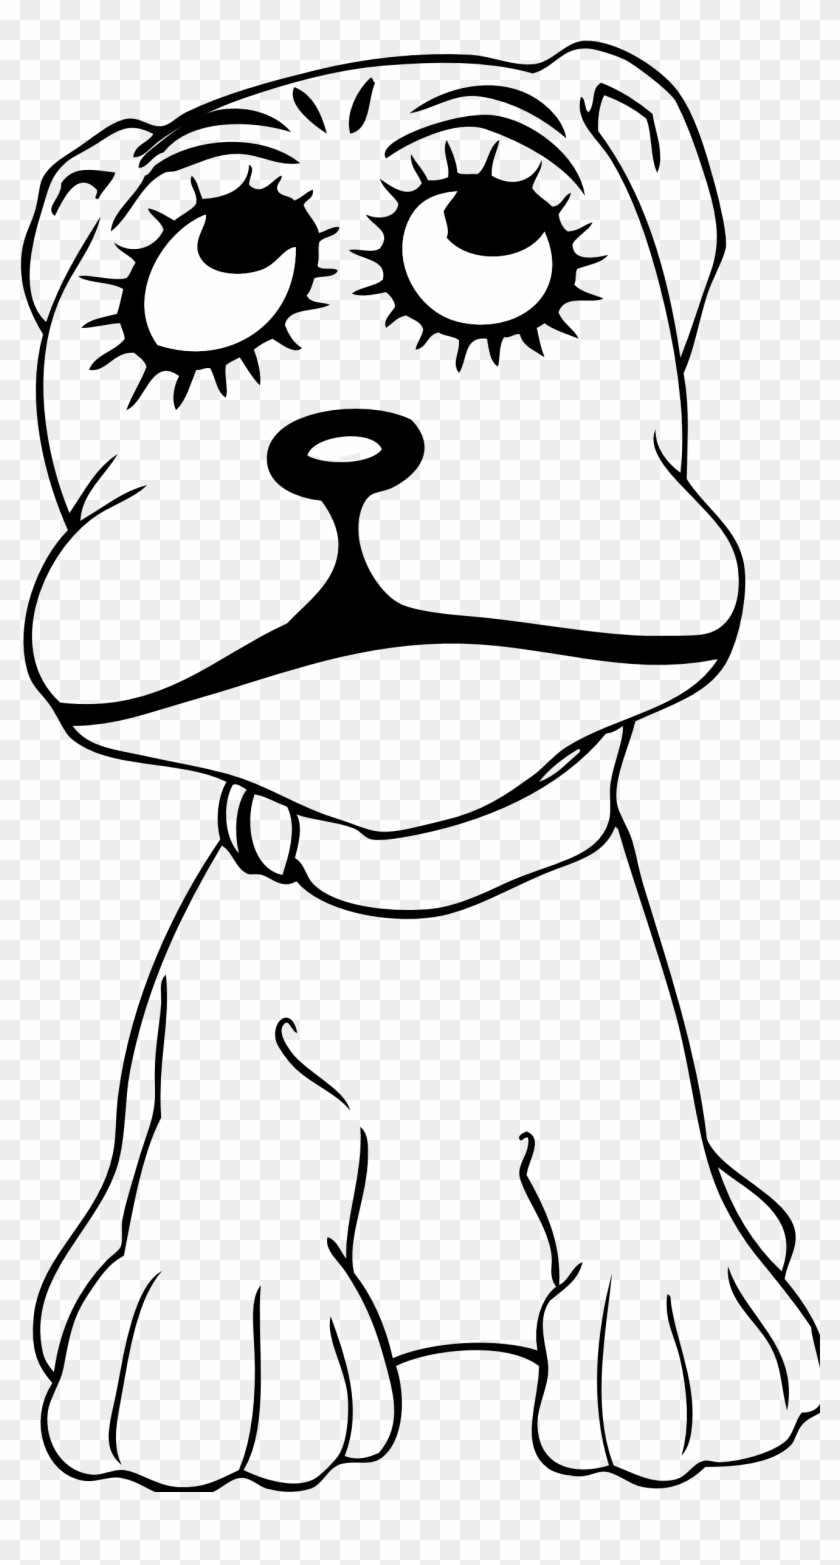 Drawings Of Cartoon Dogs - Cartoon Dog Shower Curtain #236767